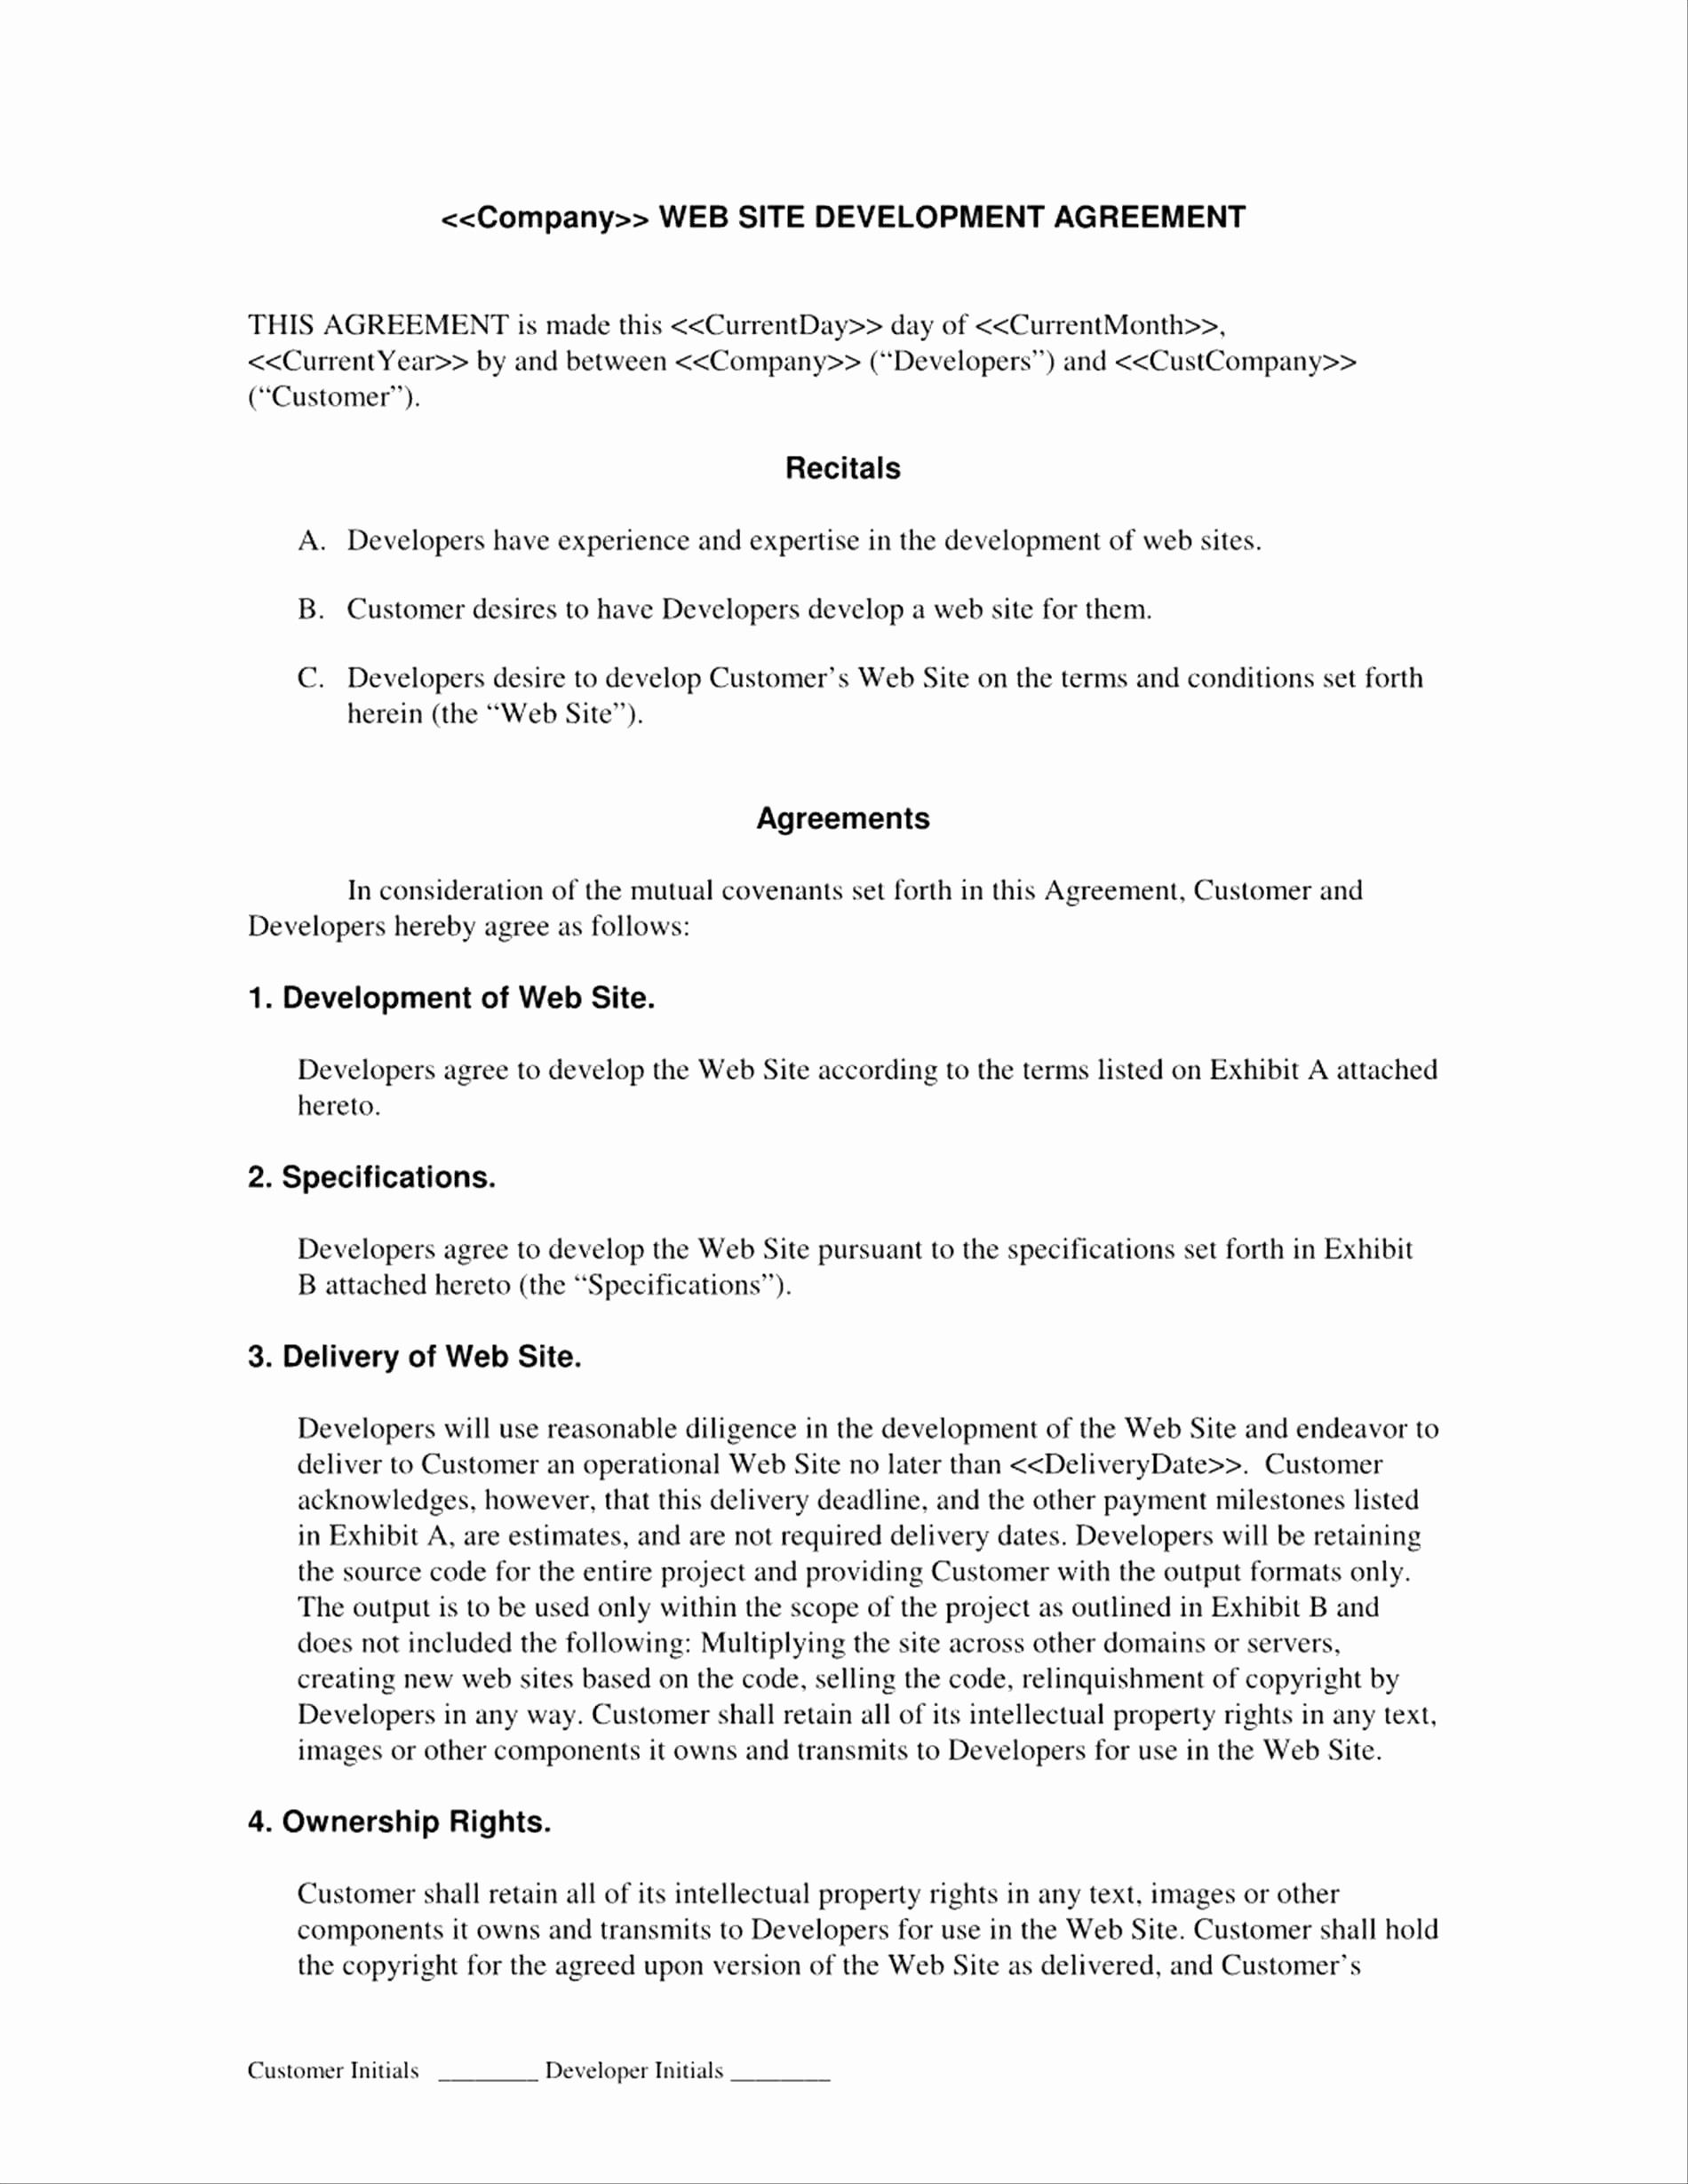 Software Development Agreement Checklist Inspirational Document